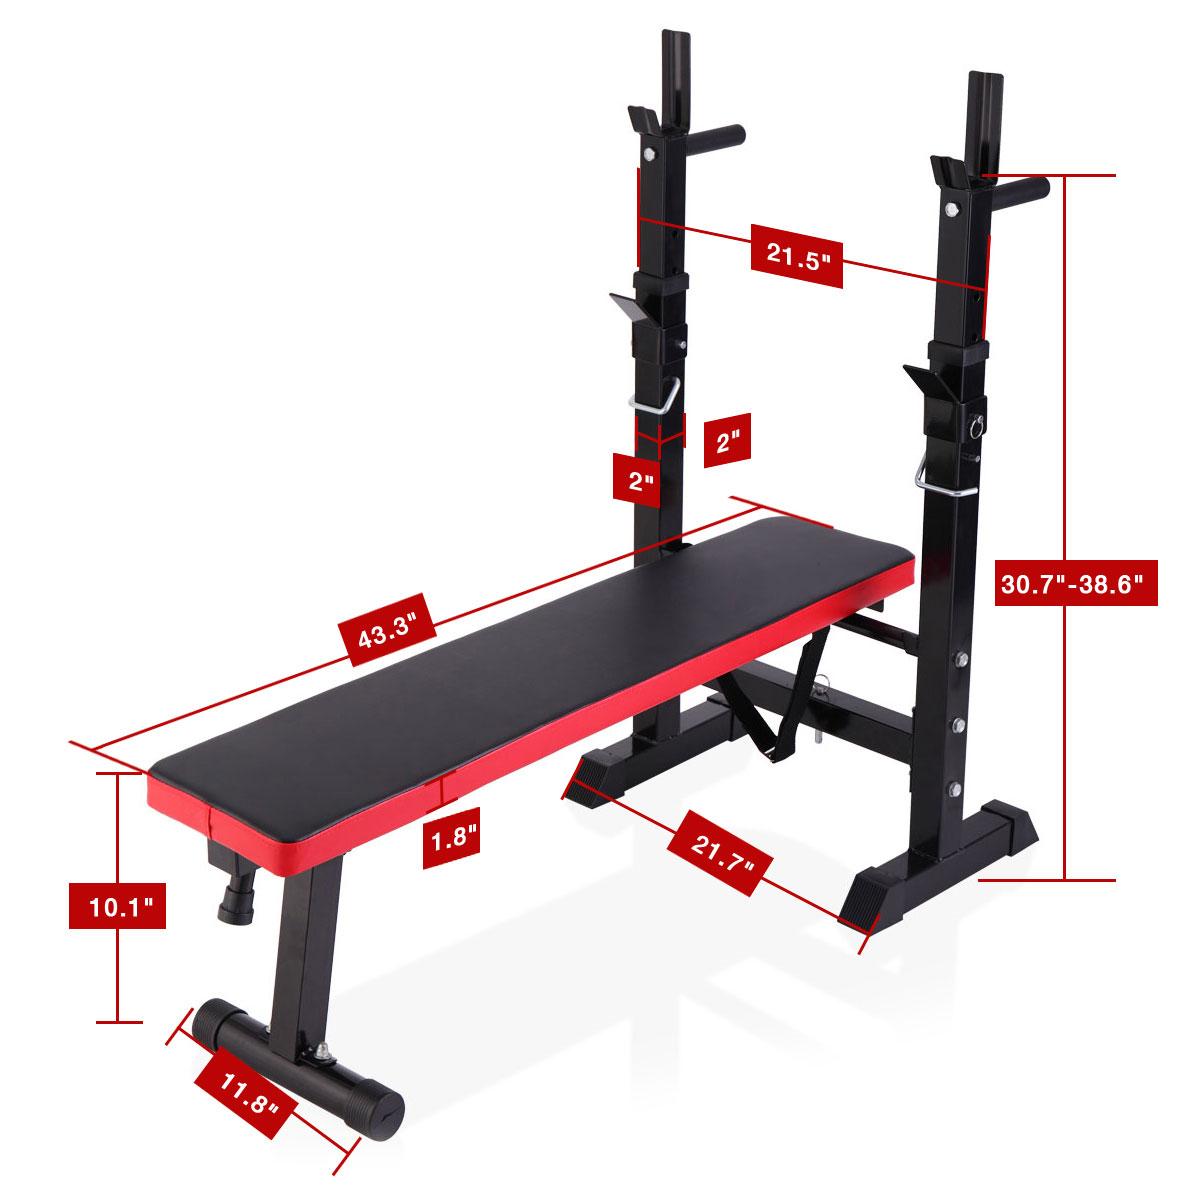 Adjustable Folding Multifunctional Workout Station Adjustable Workout Bench with Squat Rack - balck red